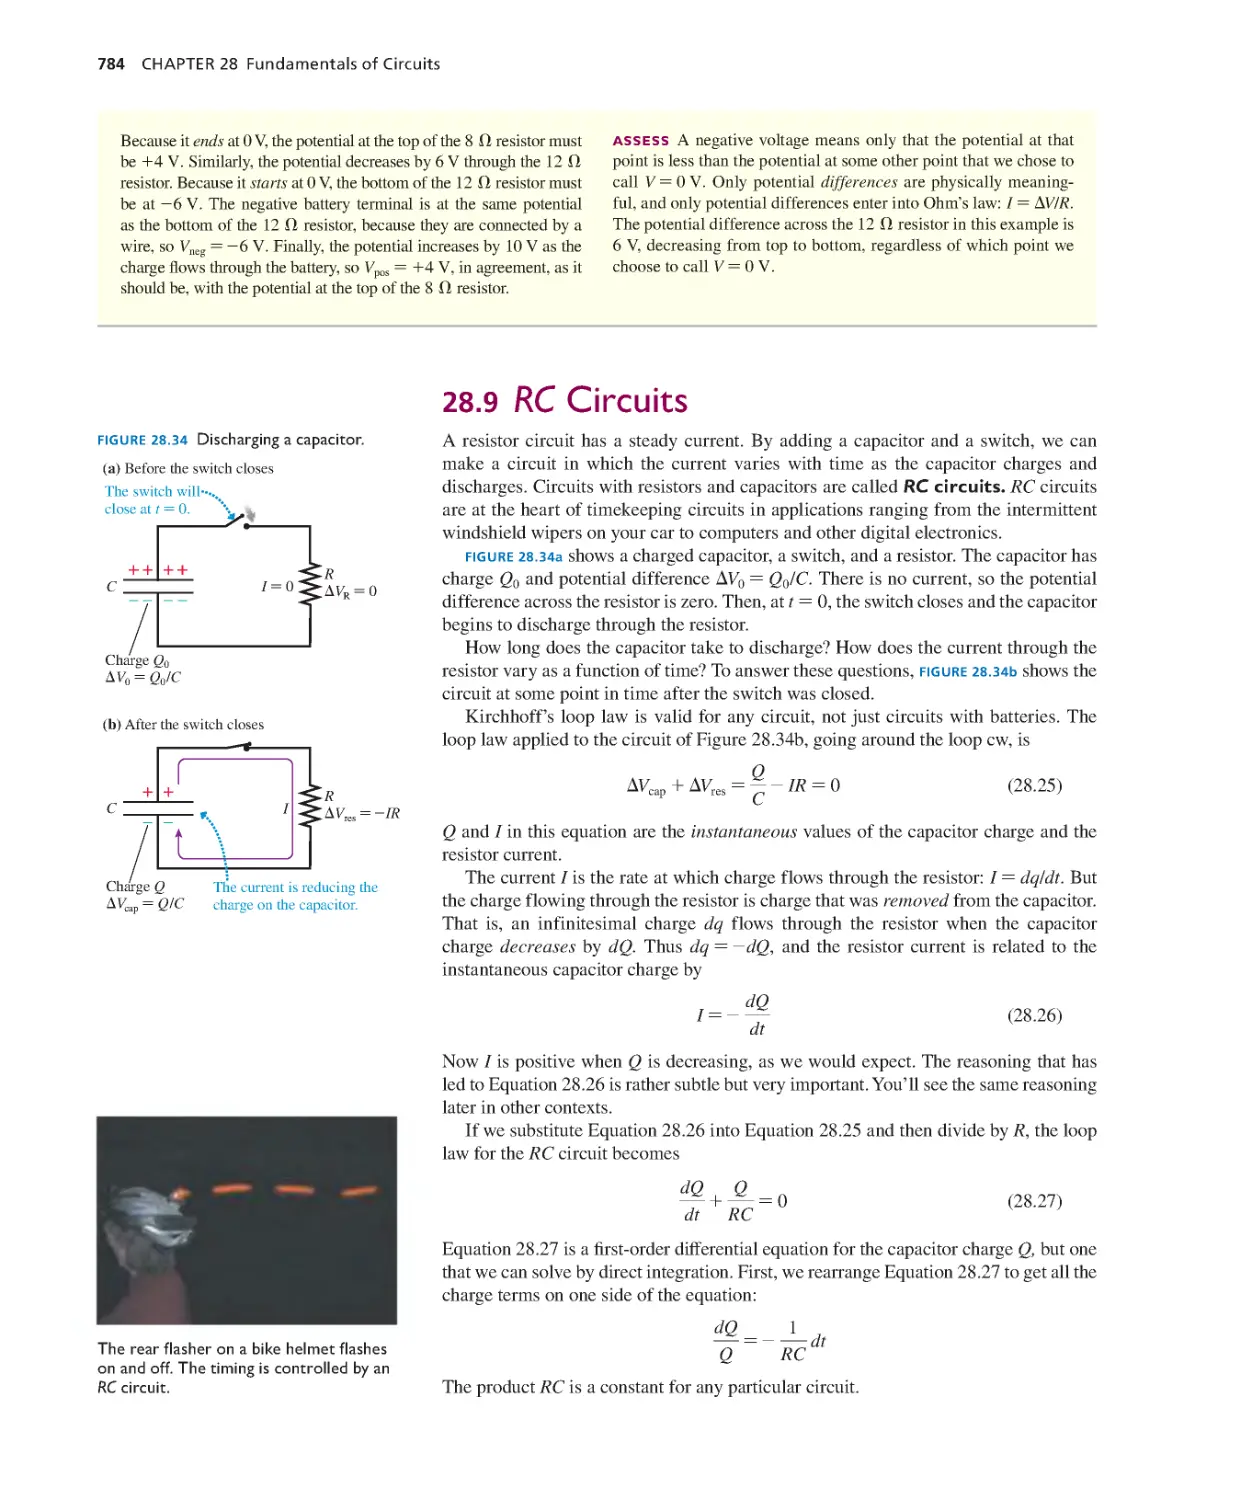 28.9. RC Circuits